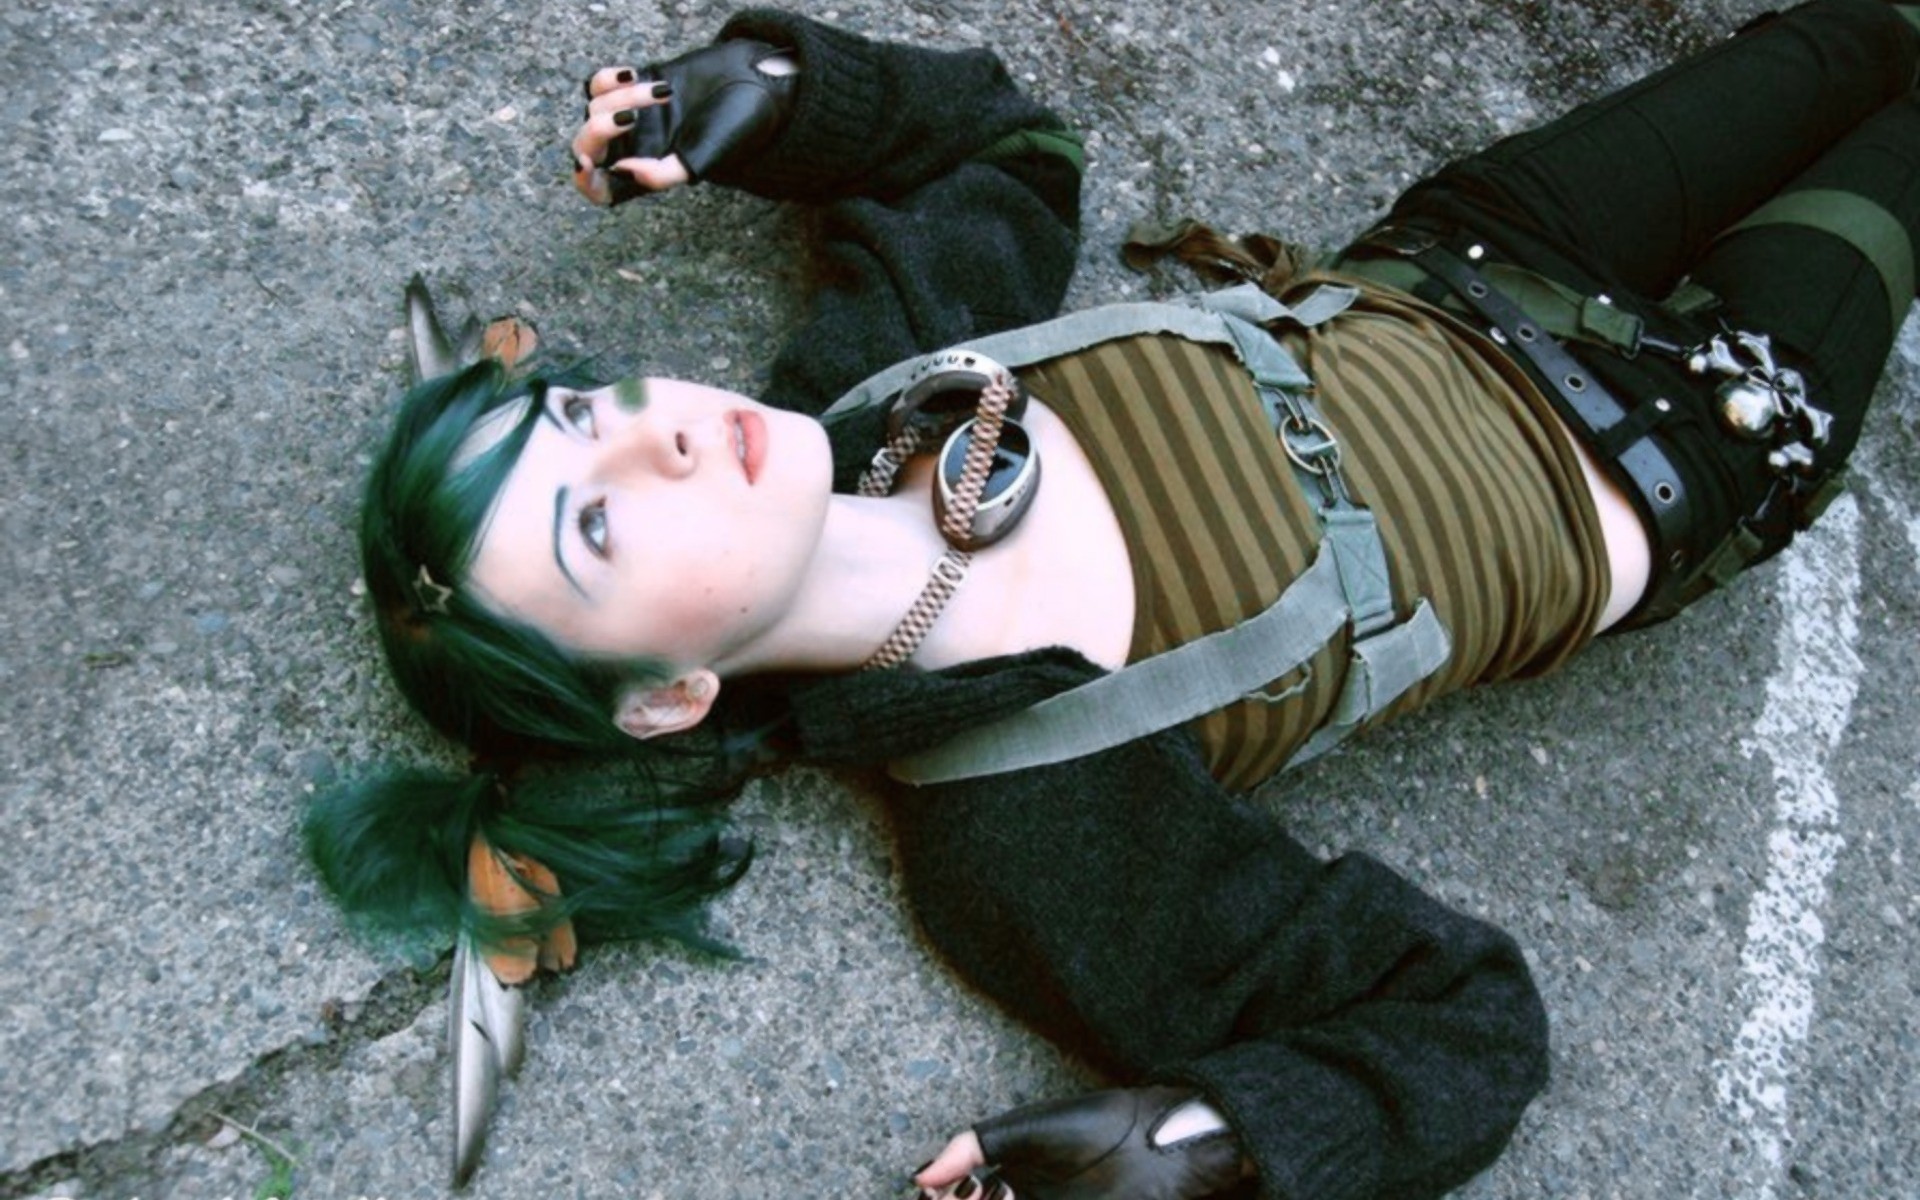 femme fille cosplay cheveux verts gris fantaisie